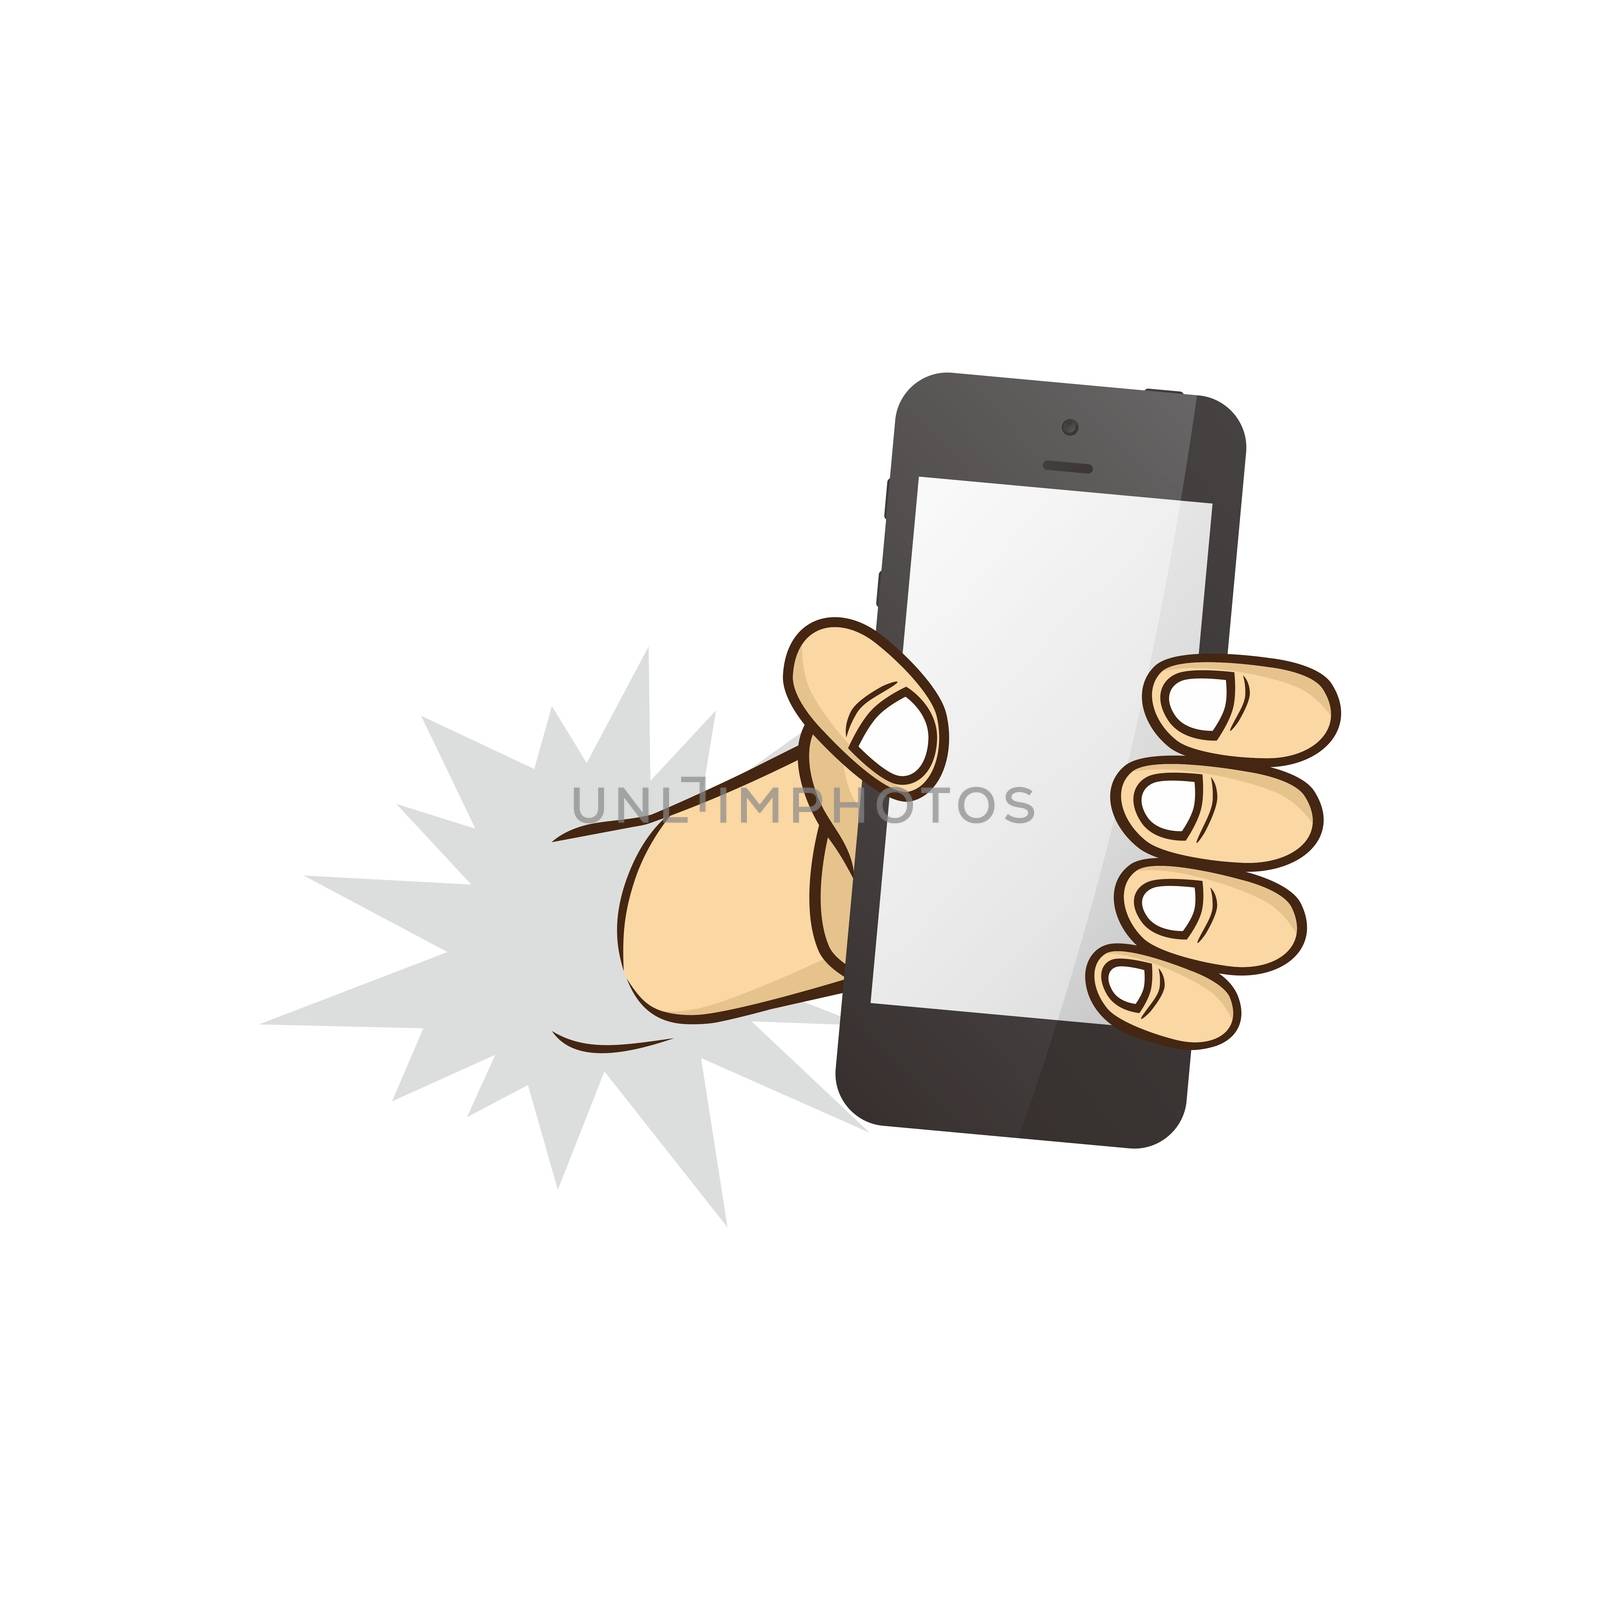 cartoon hand holding phone character vector illustration